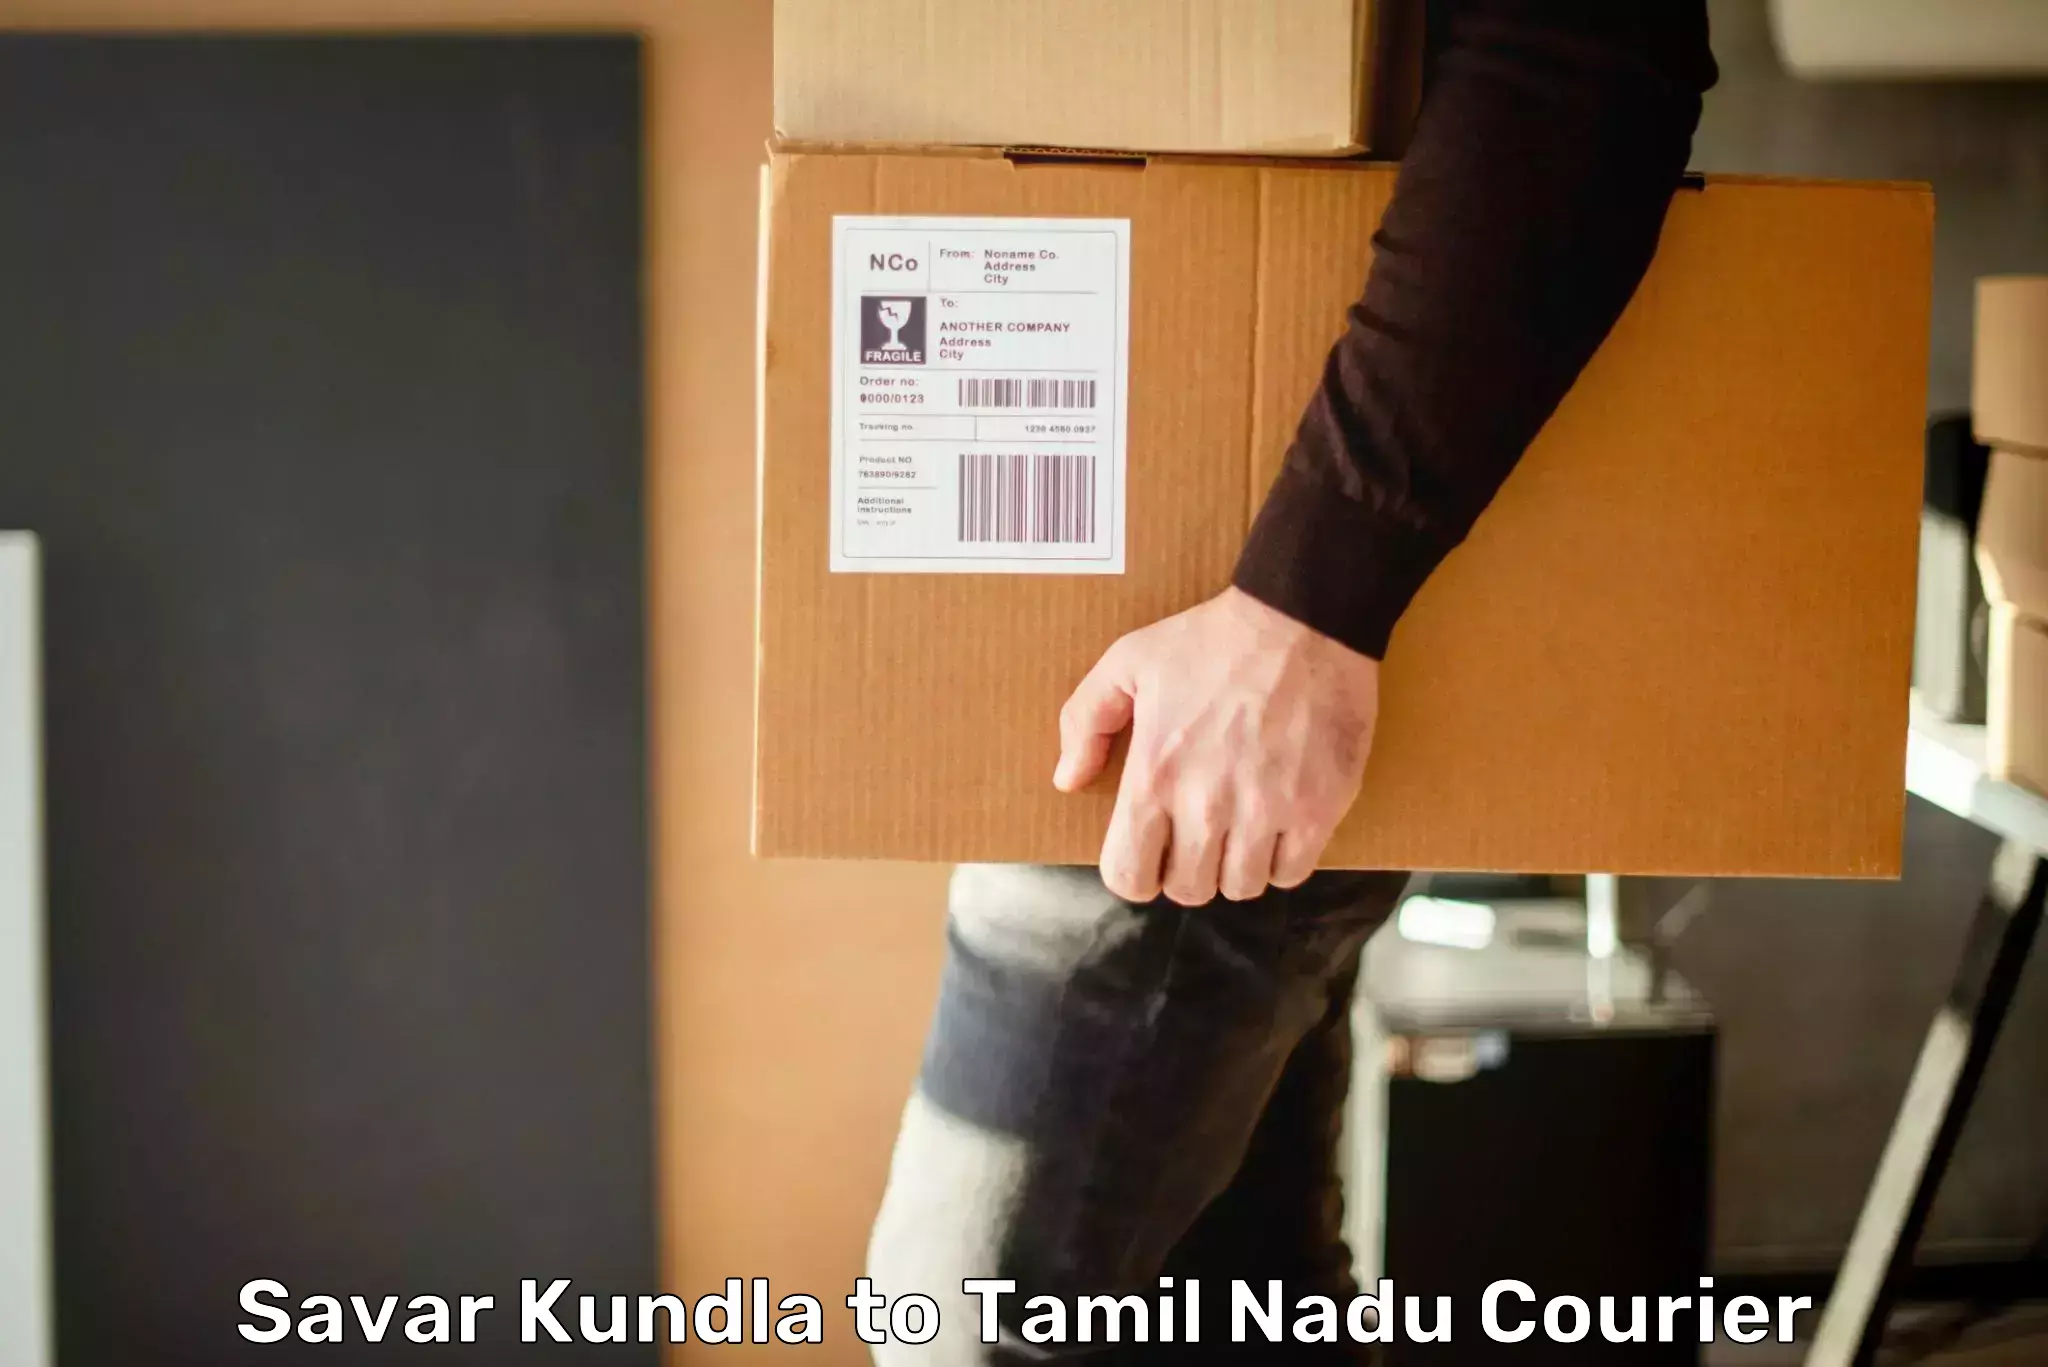 Customer-centric shipping Savar Kundla to Tamil Nadu